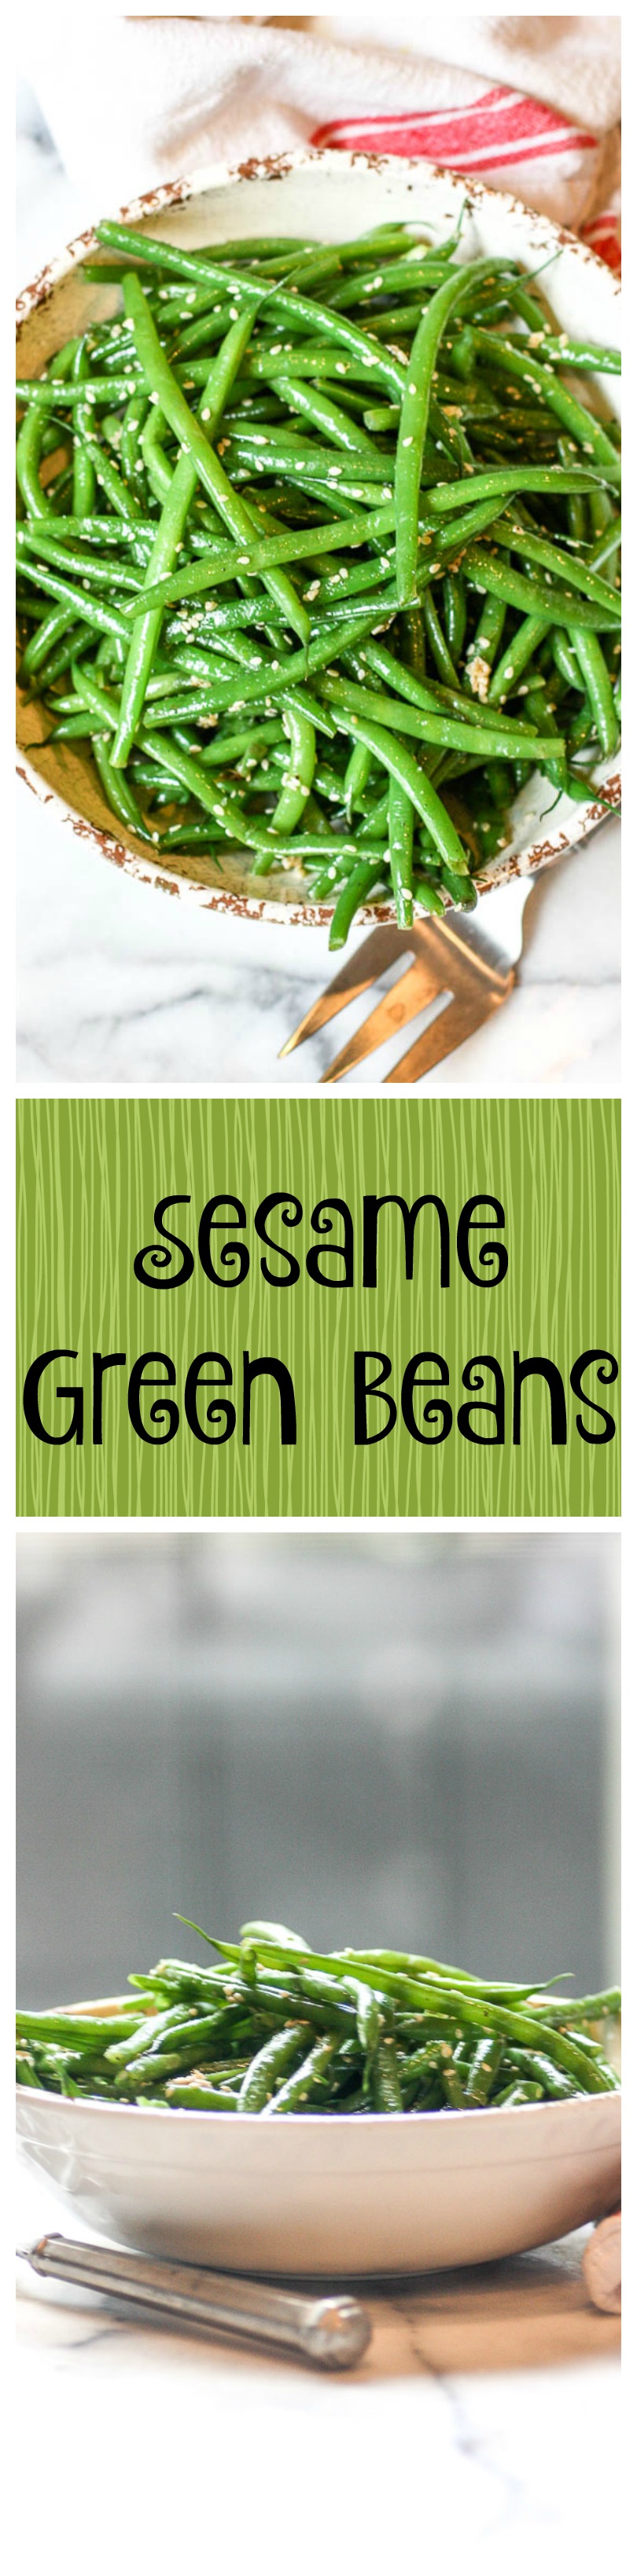 sesame green beans